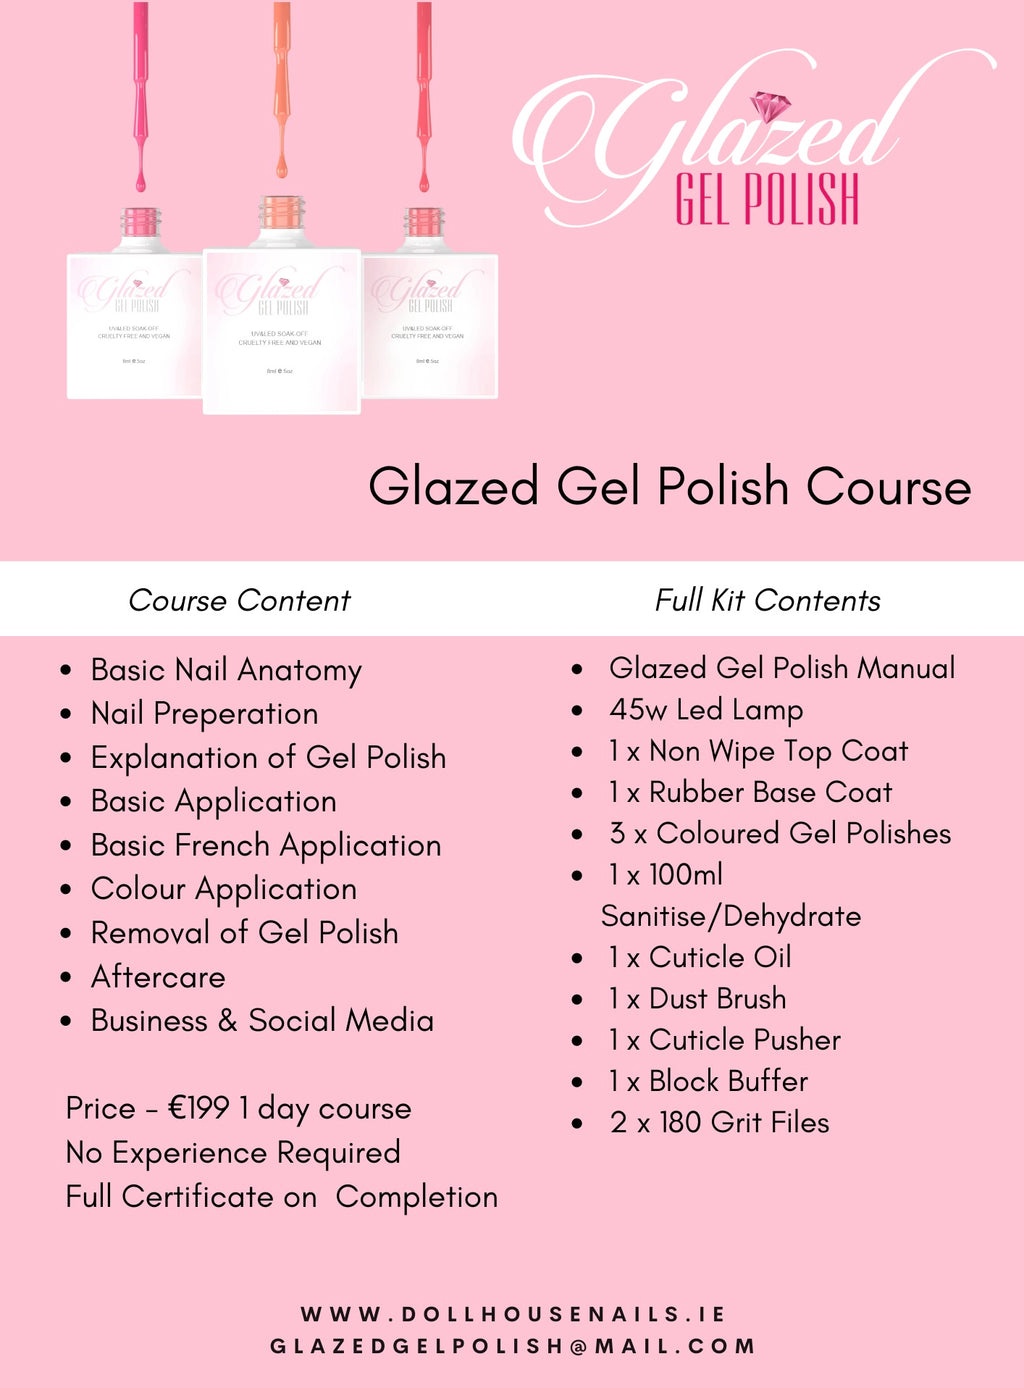 Glazed Gel Polish Course